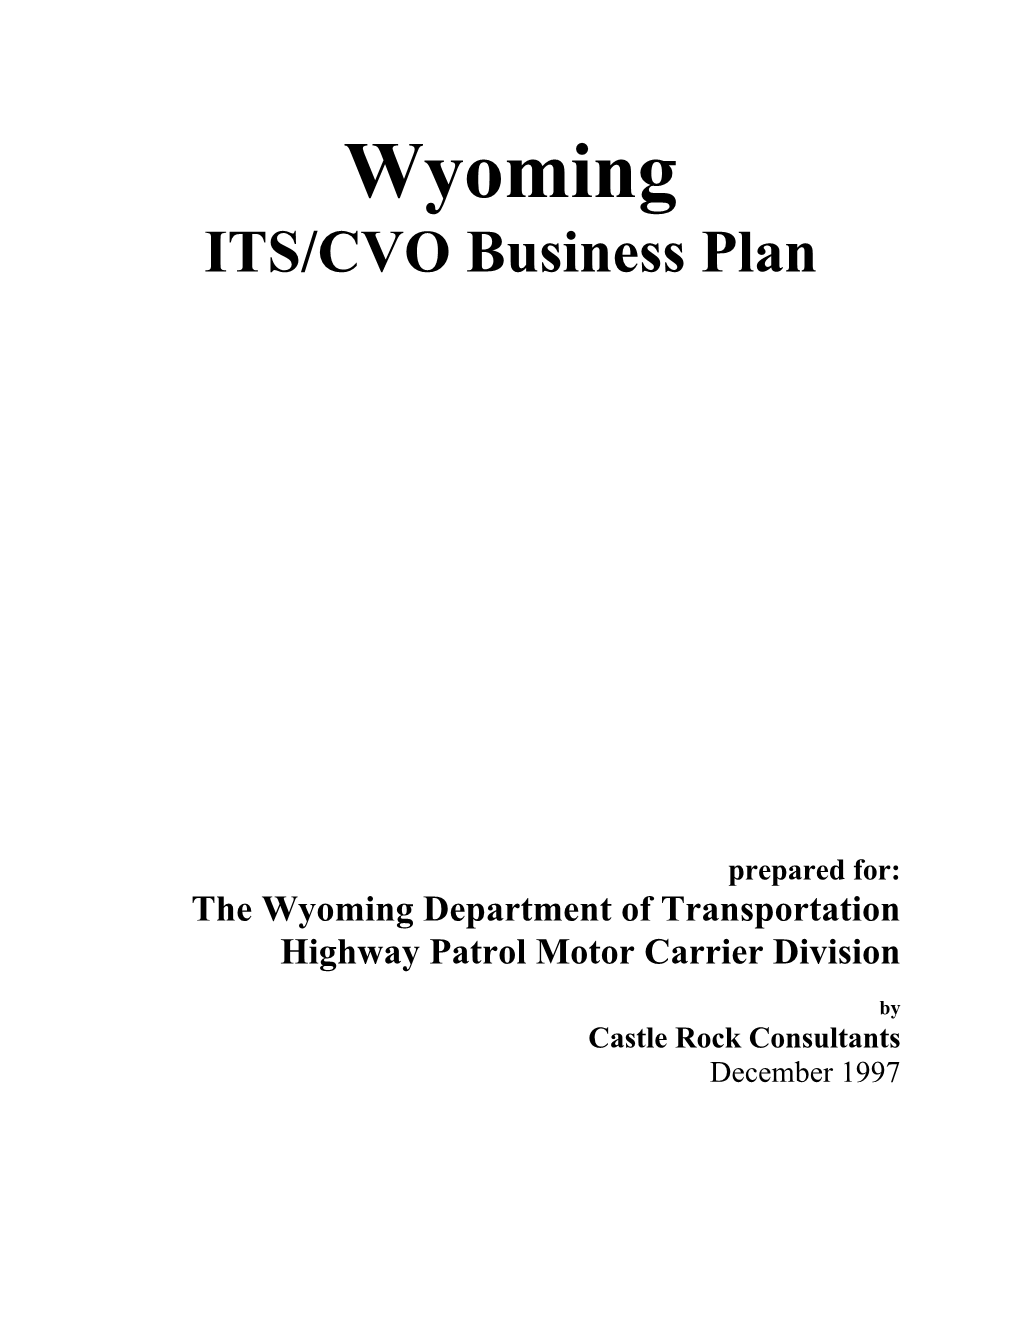 Wyoming ITS/CVO Business Plan